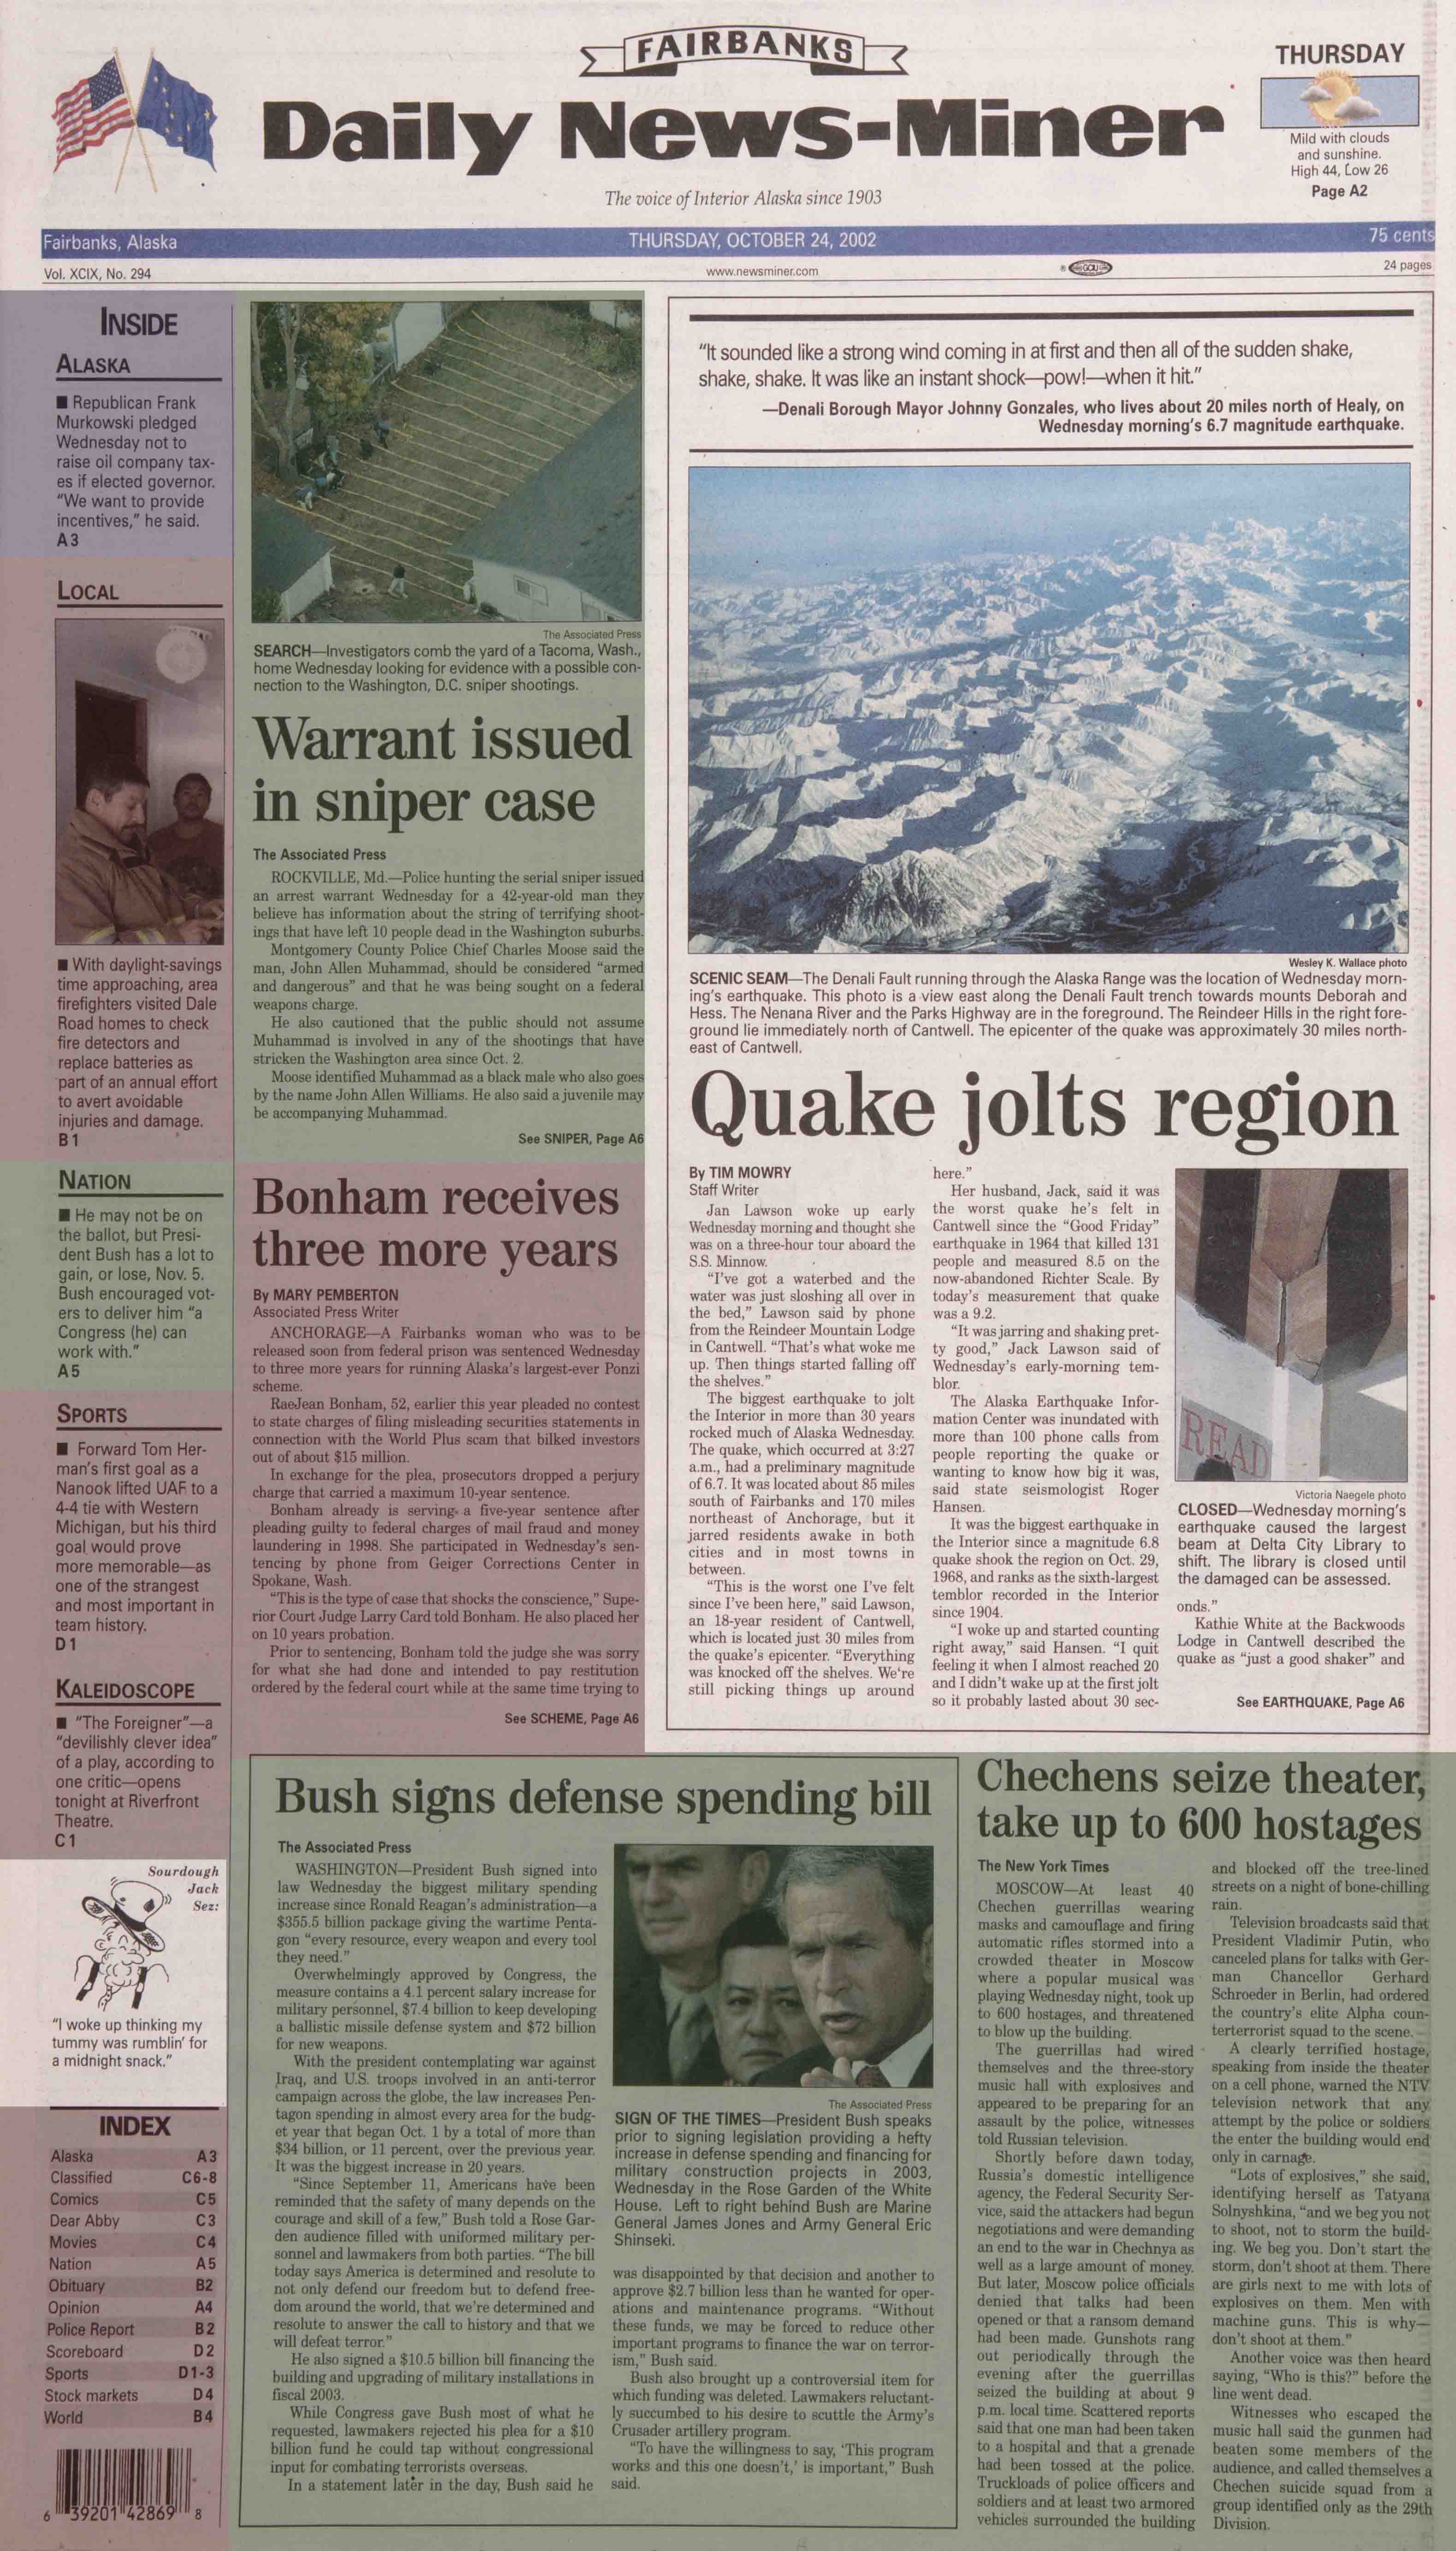 2002 October 24, Fairbanks Daily News-Miner (pg 1)